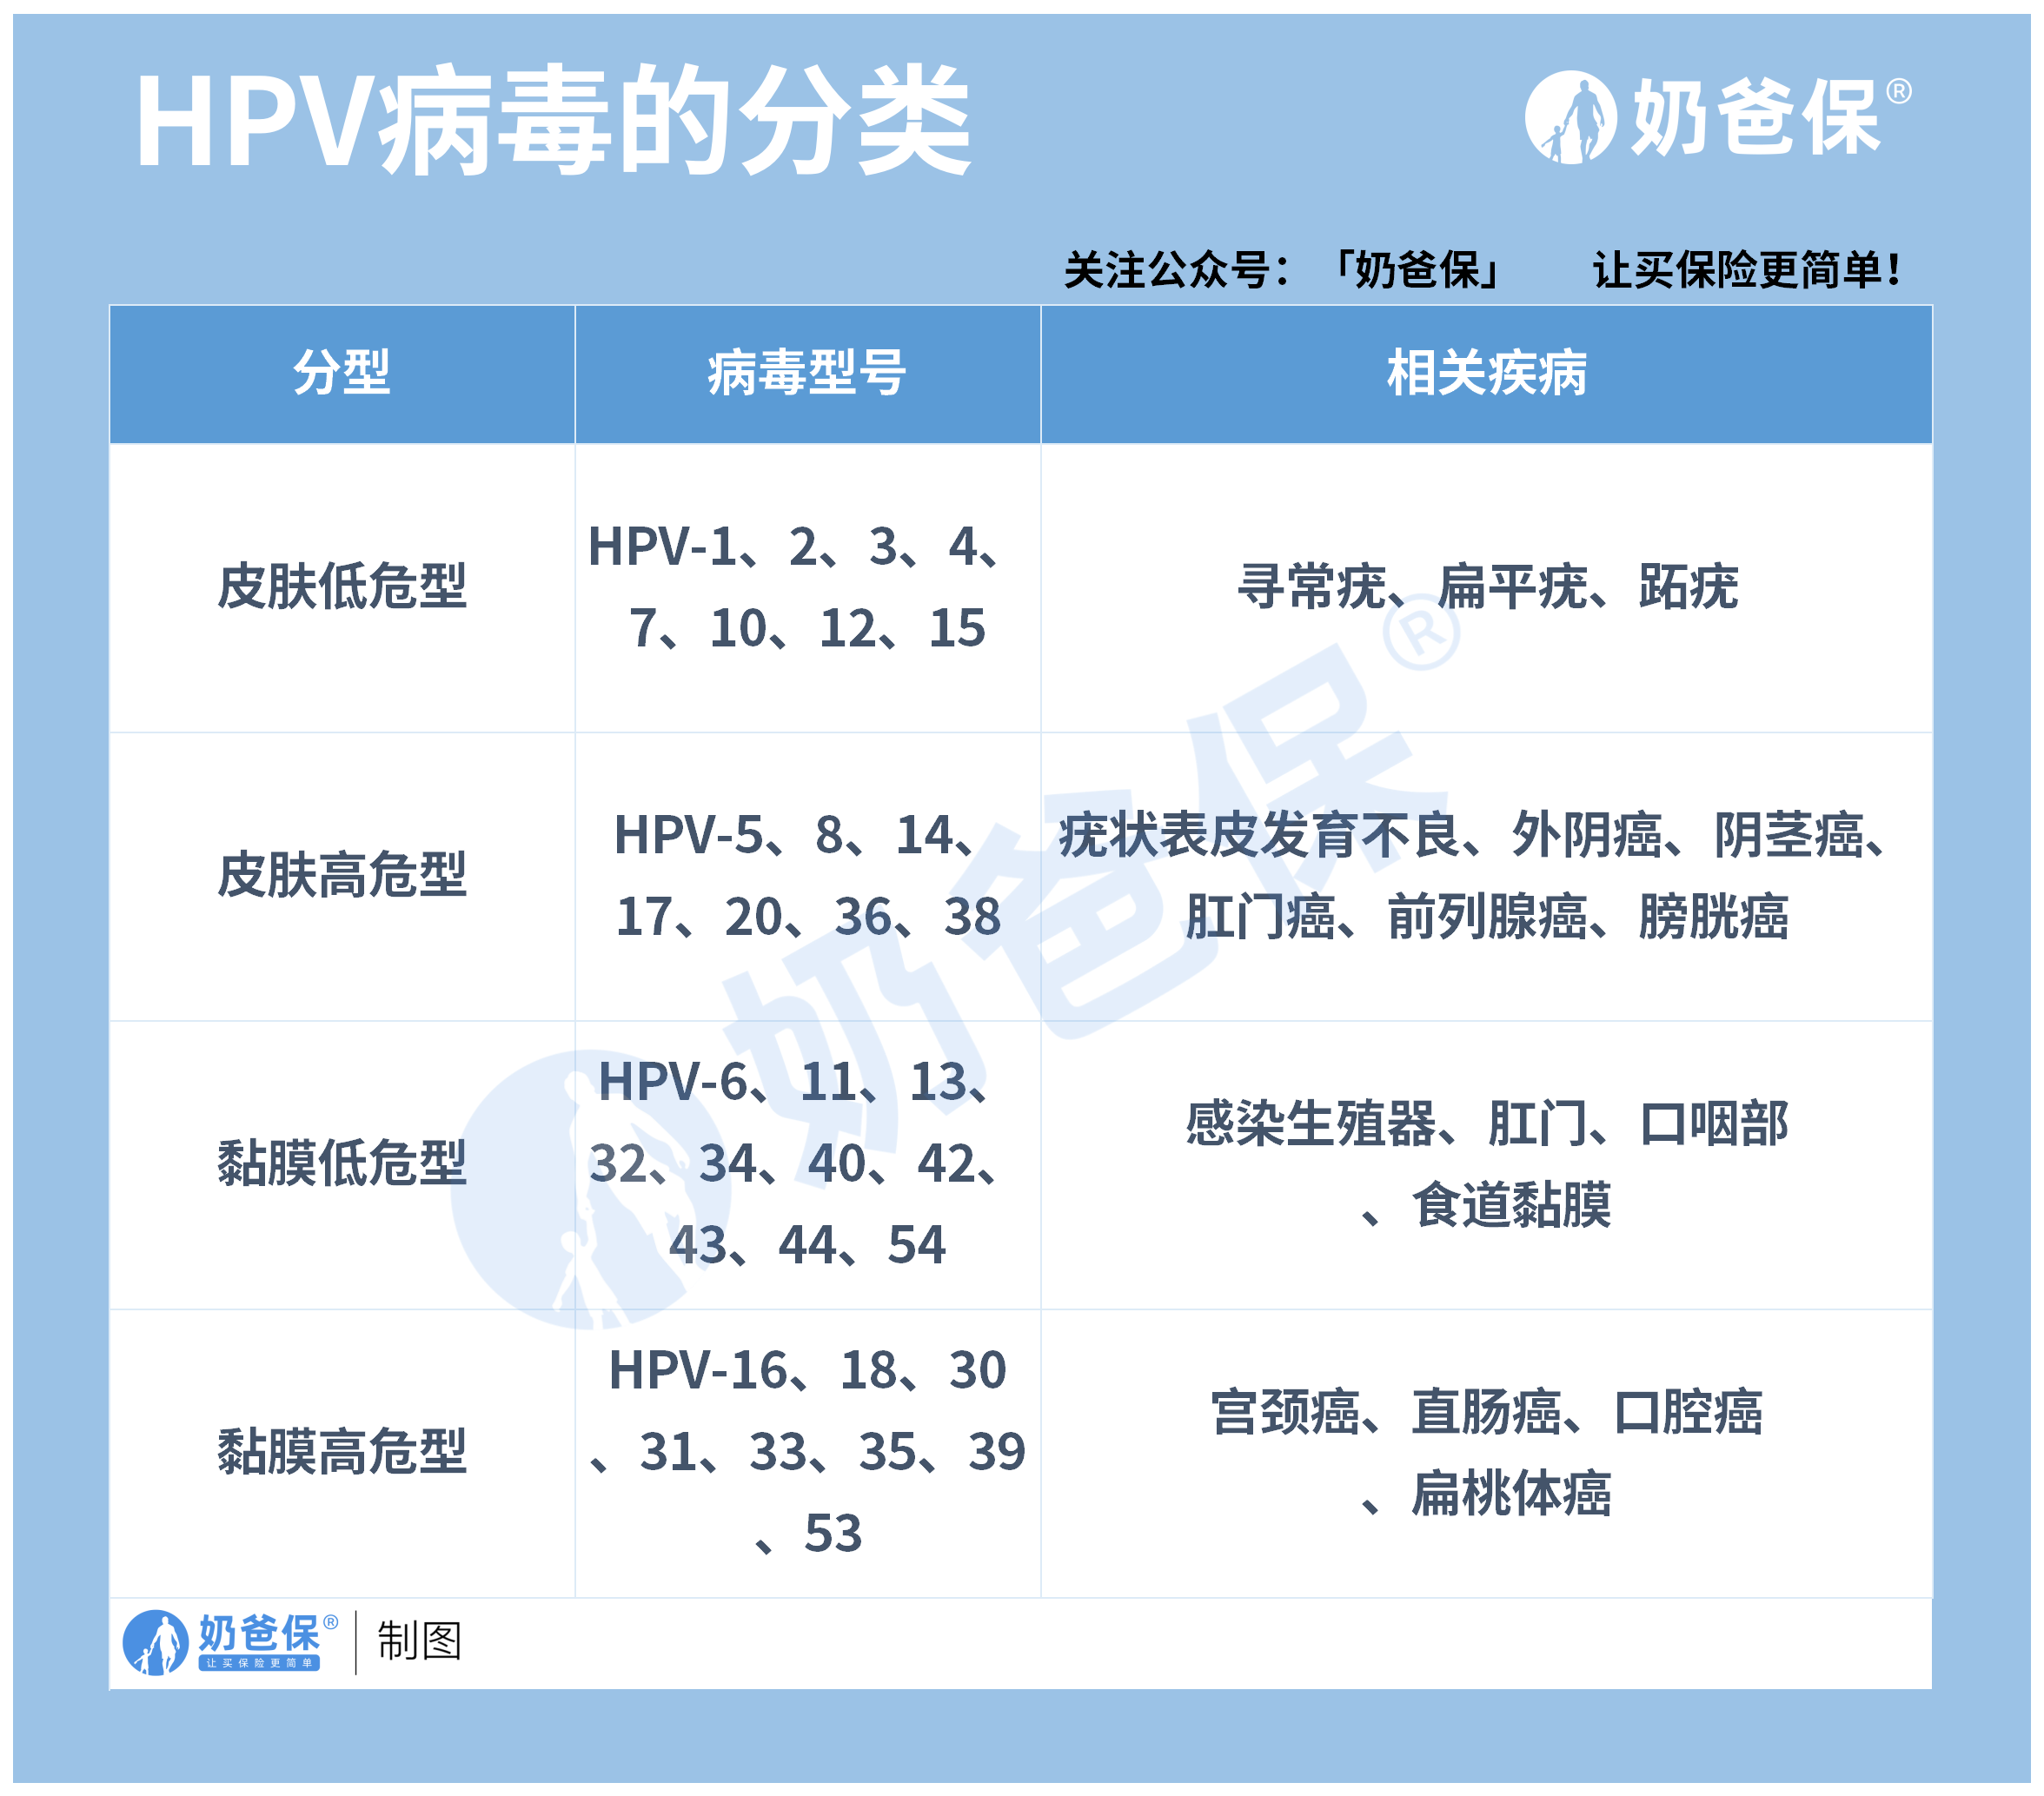 hpv型号和疾病对照表图片